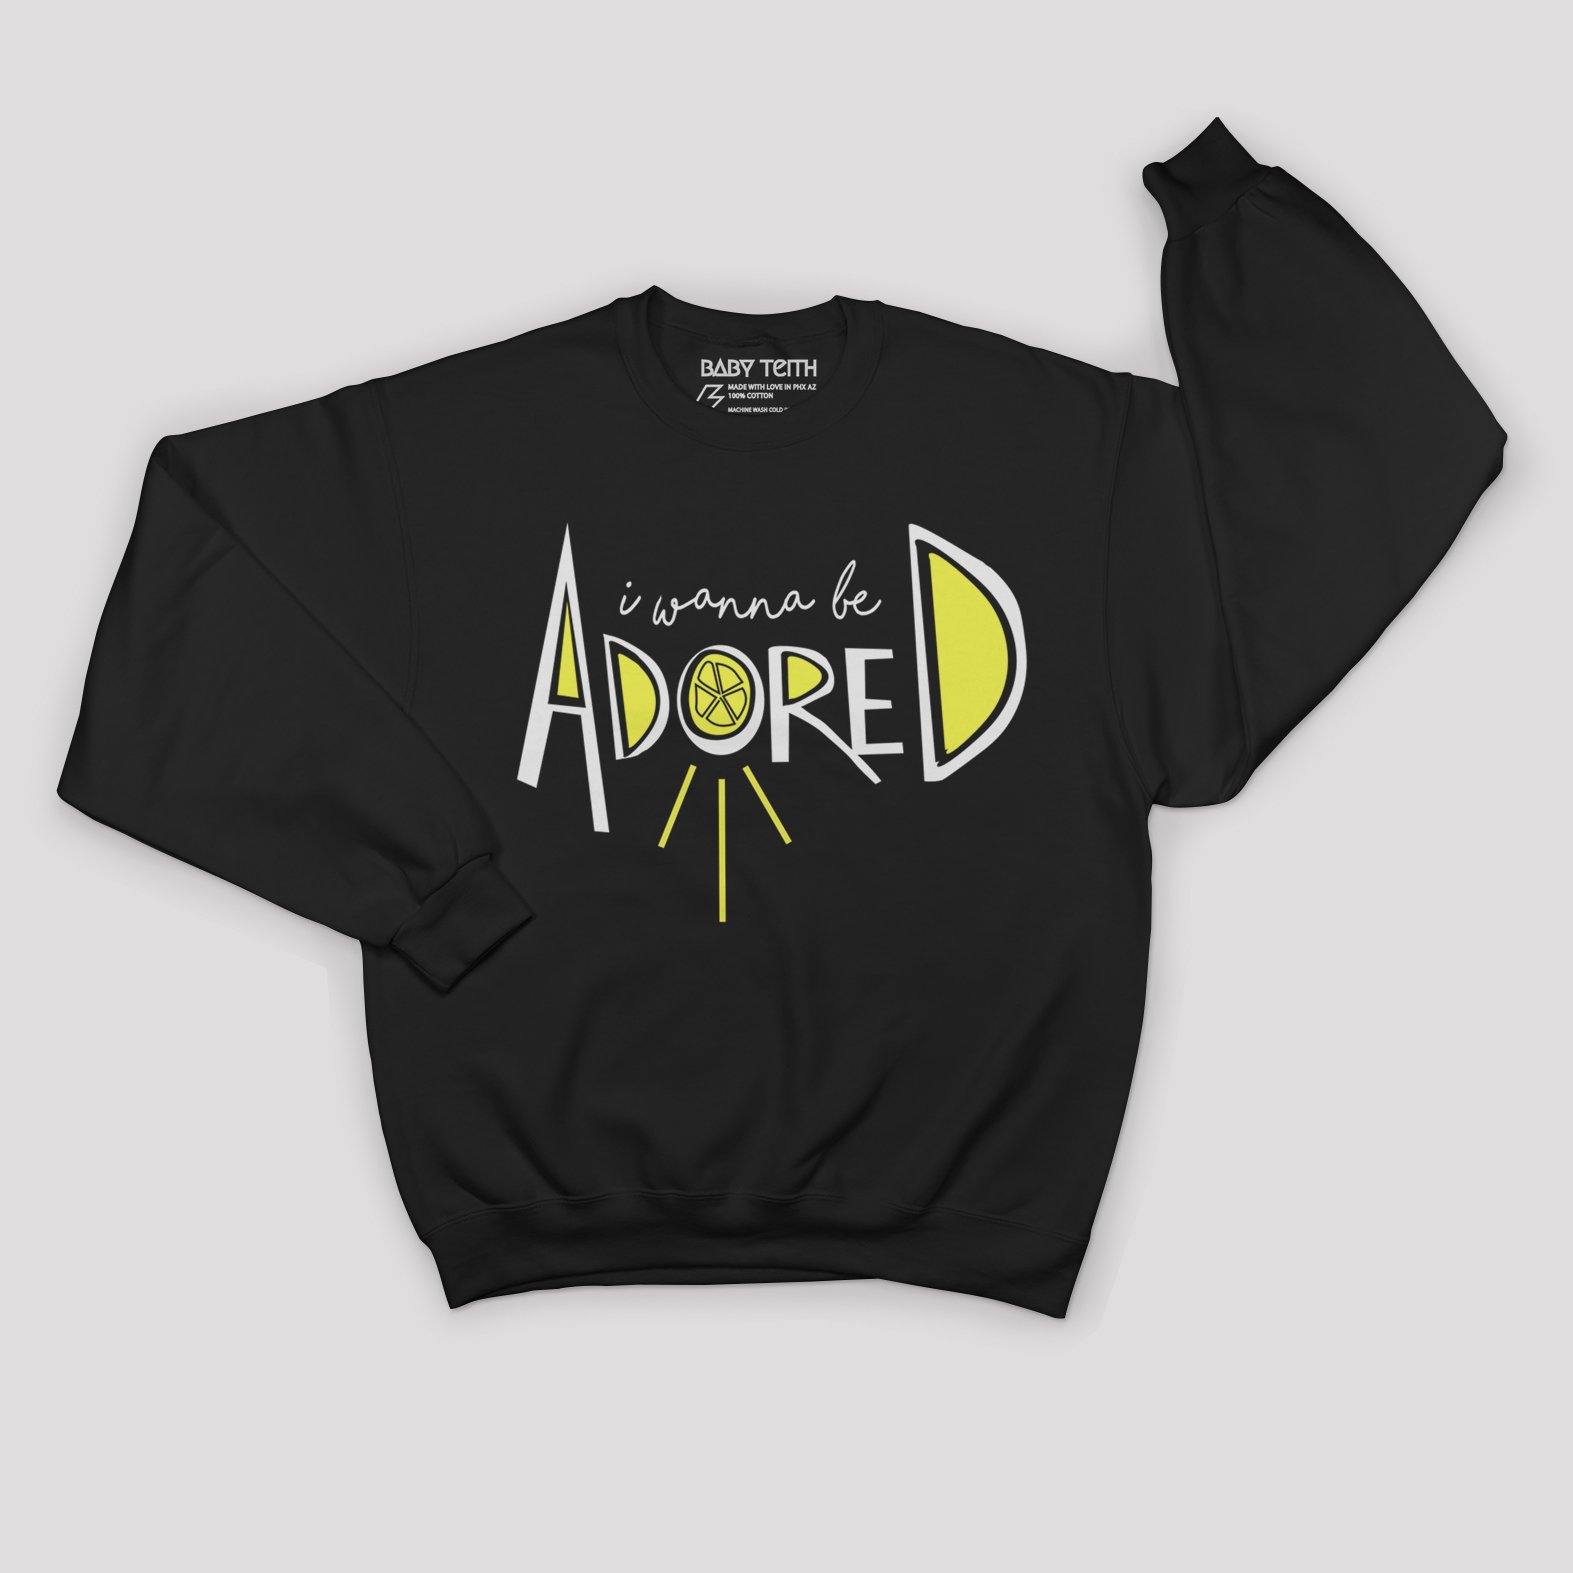 "I Wanna Be Adored" Sweatshirt for Kids - Baby Teith